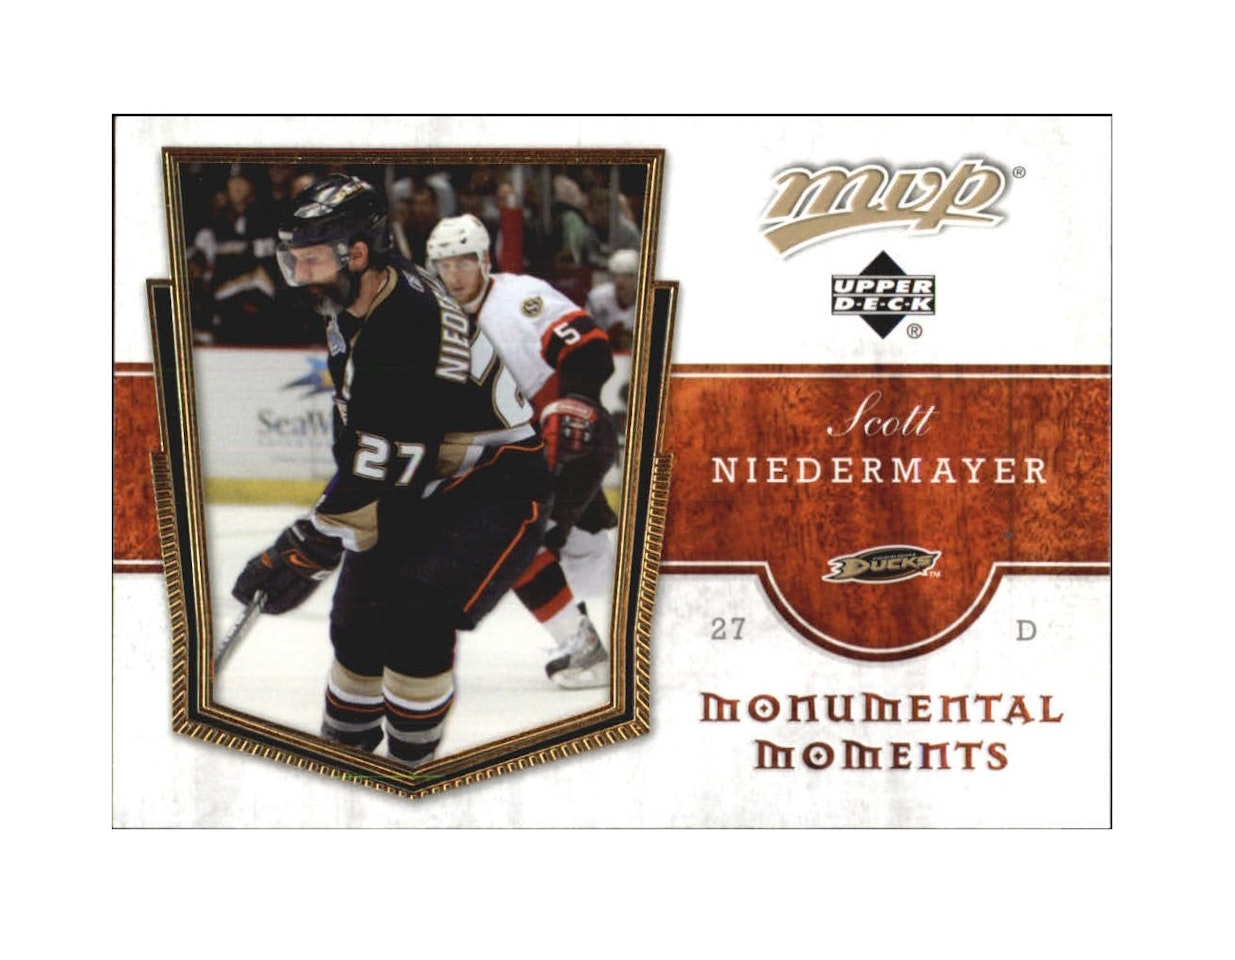 2007-08 Upper Deck MVP Monumental Moments #MM14 Scott Niedermayer (10-X174-DUCKS)